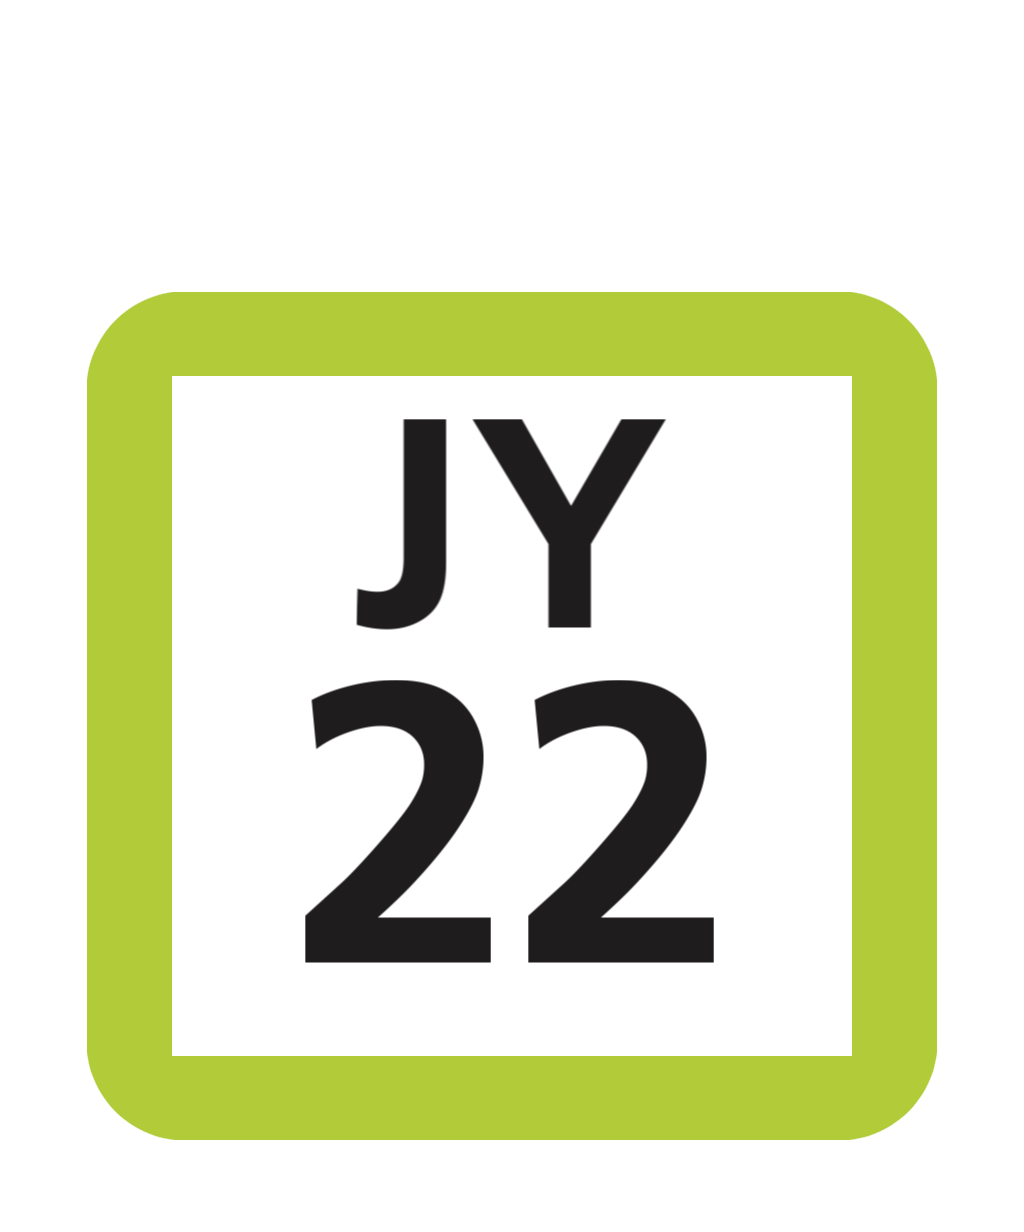 JY-22